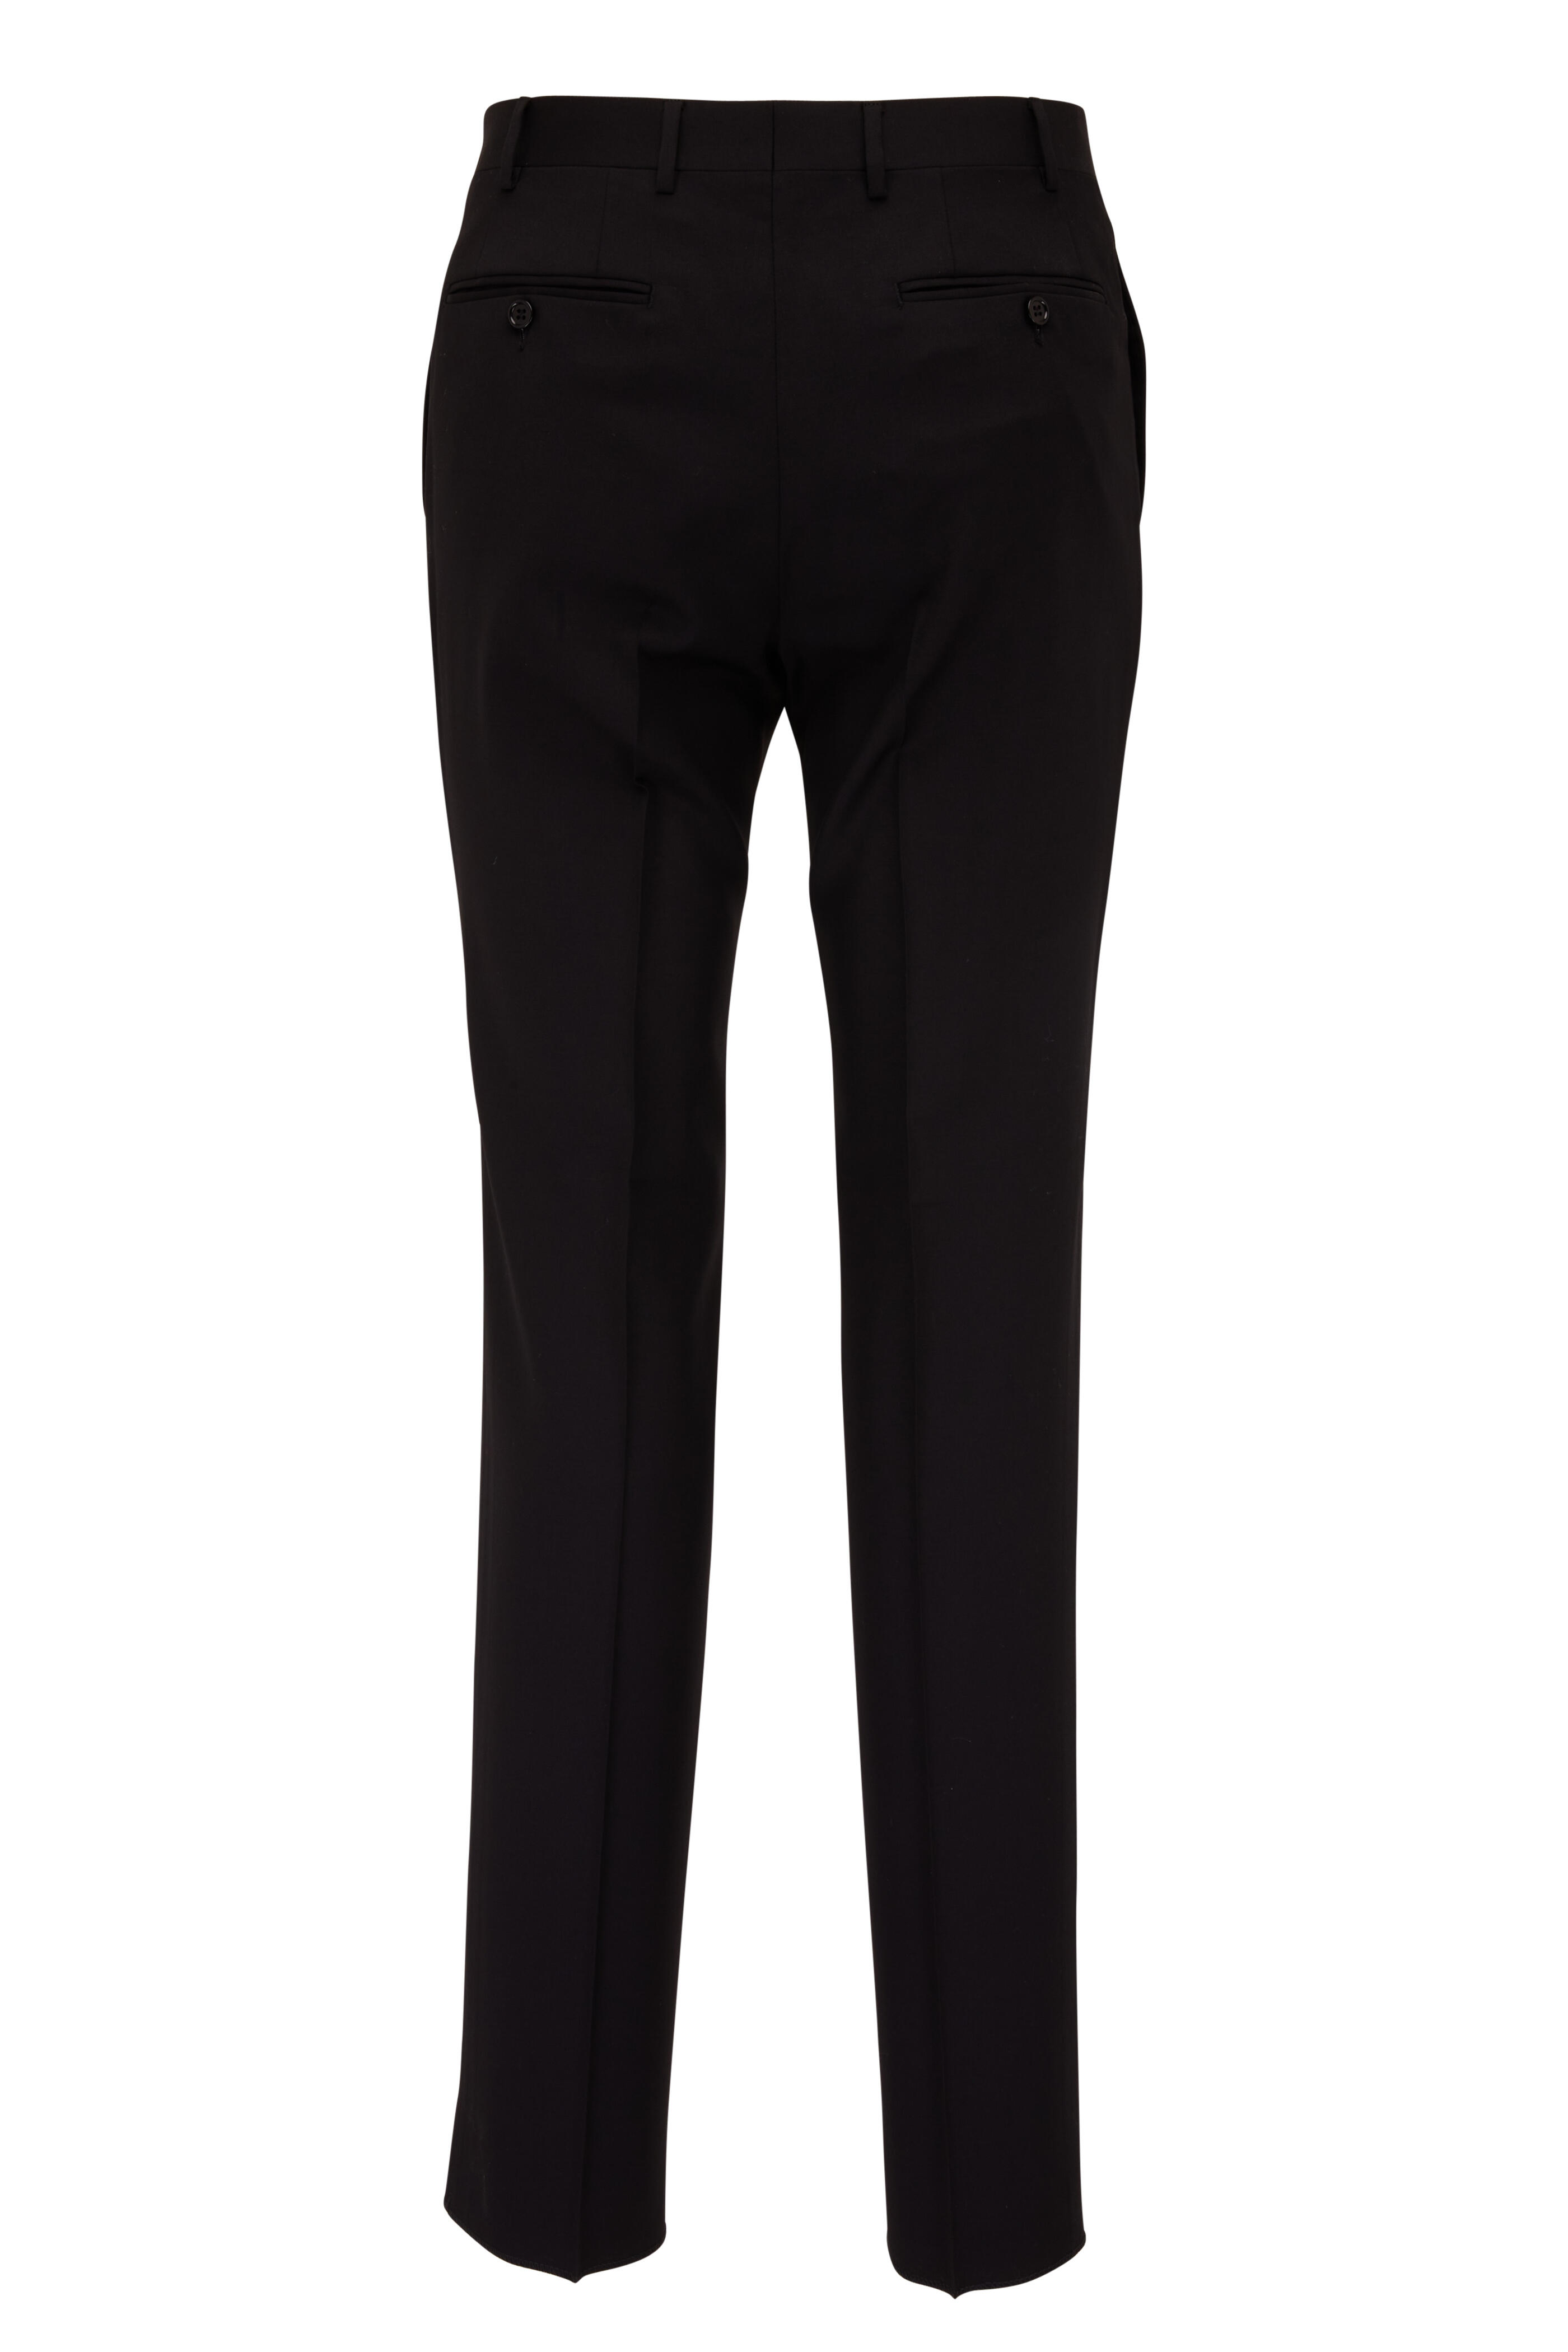 Canali - Black Wool Dress Pant | Mitchell Stores